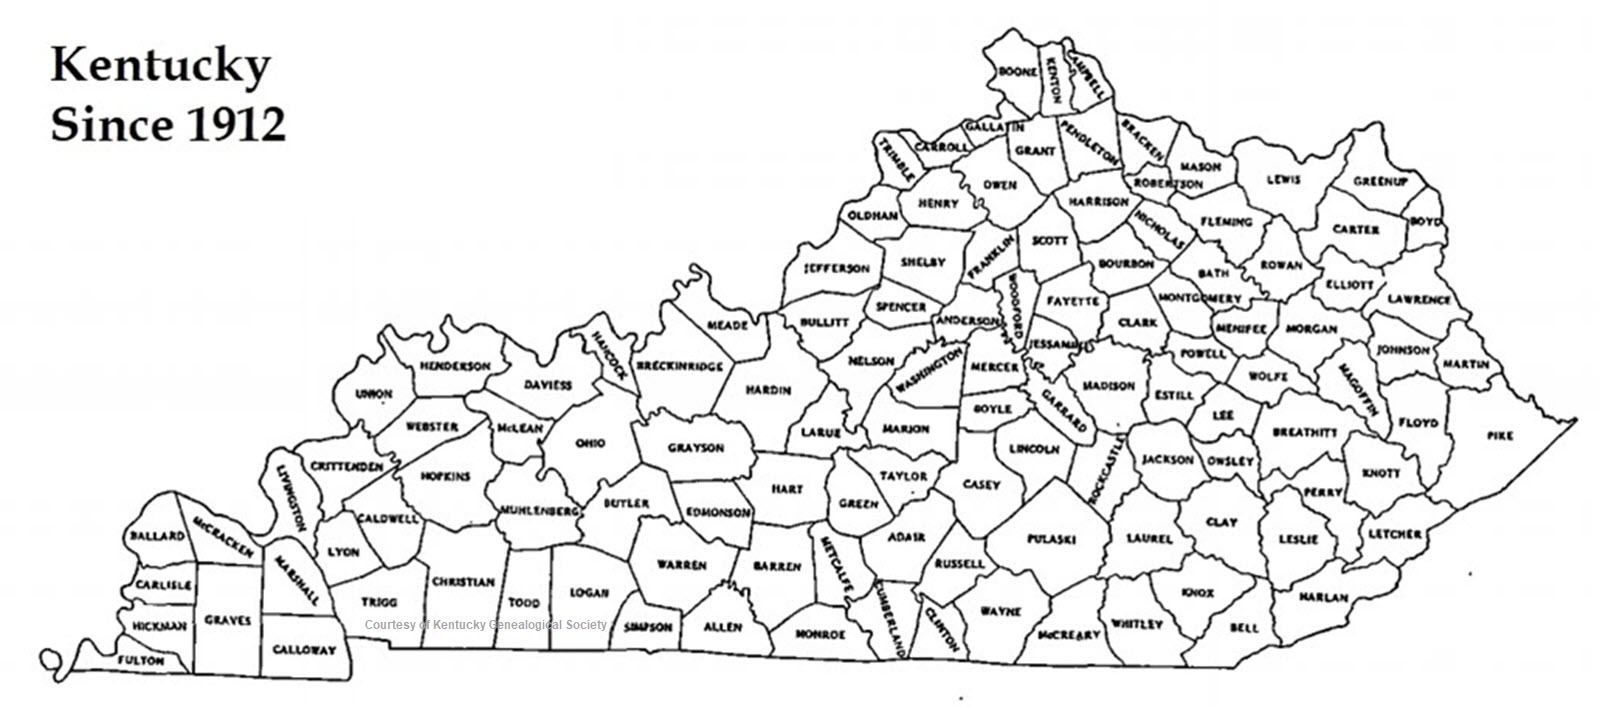 Kentucky county map since 1912